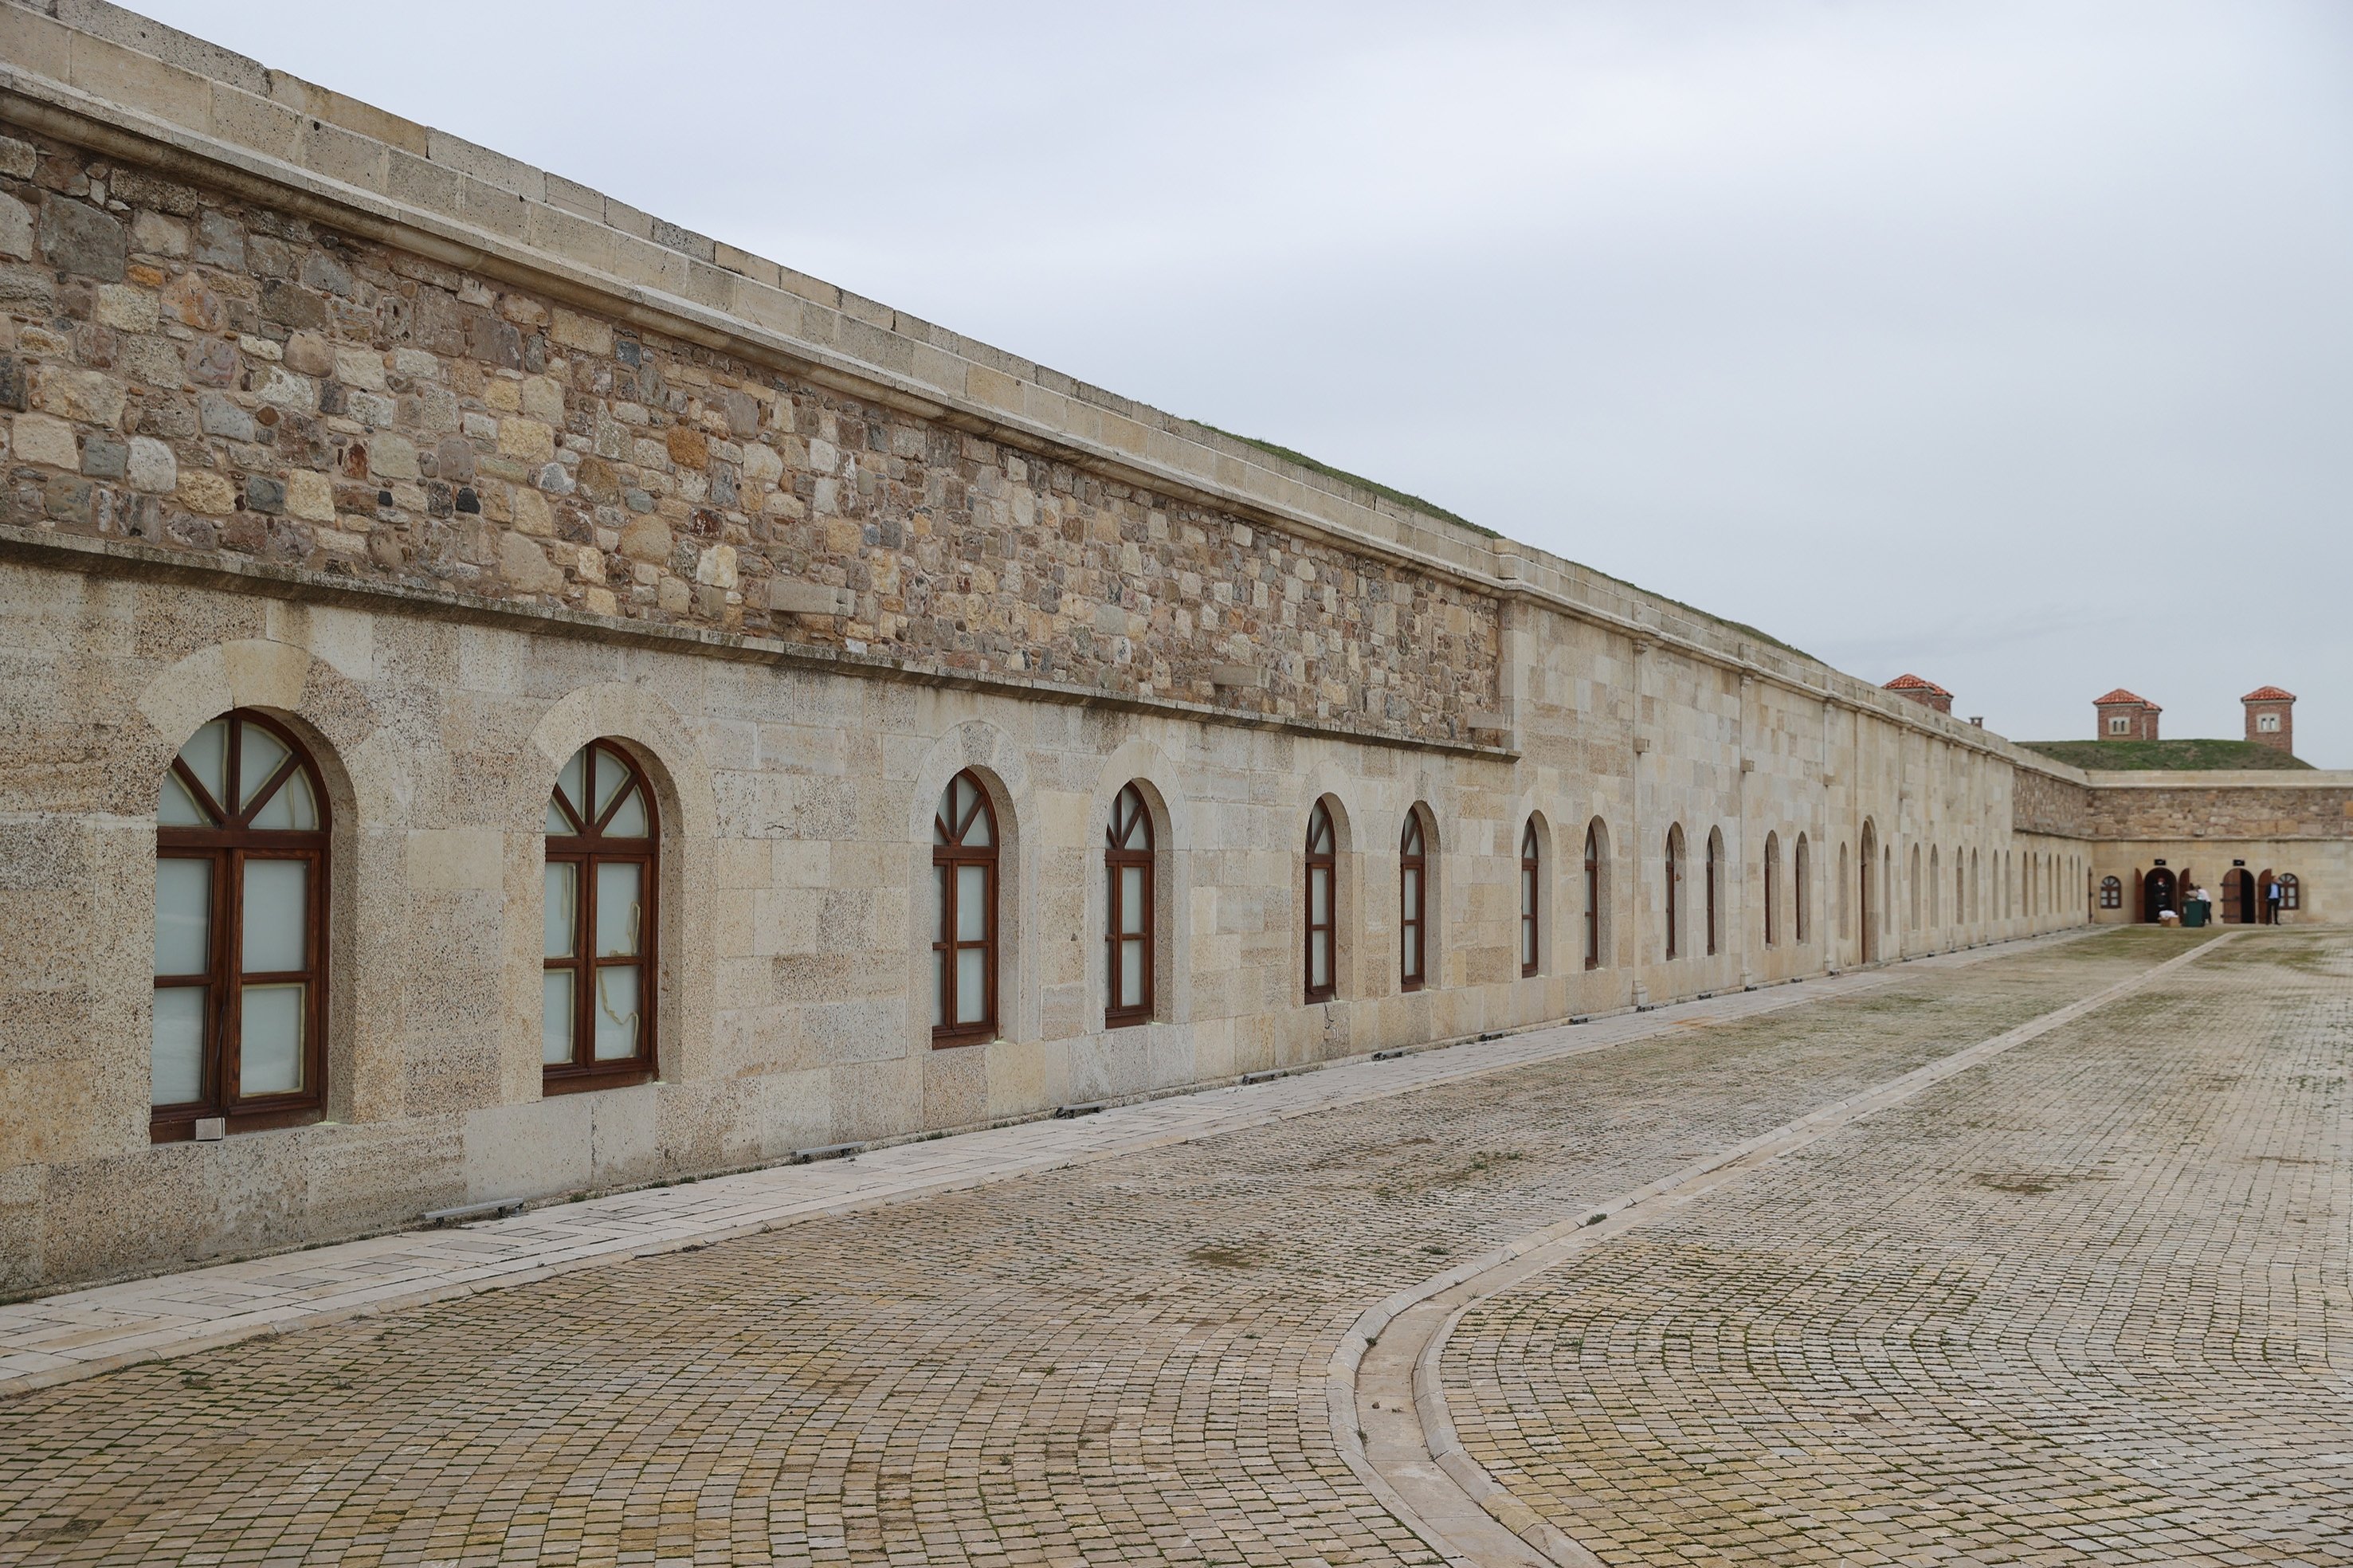 Restored buildings are seen at the Hıdırlık Bastion near Edirne in northwestern Turkey, Dec. 27, 2021. (AA Photo)